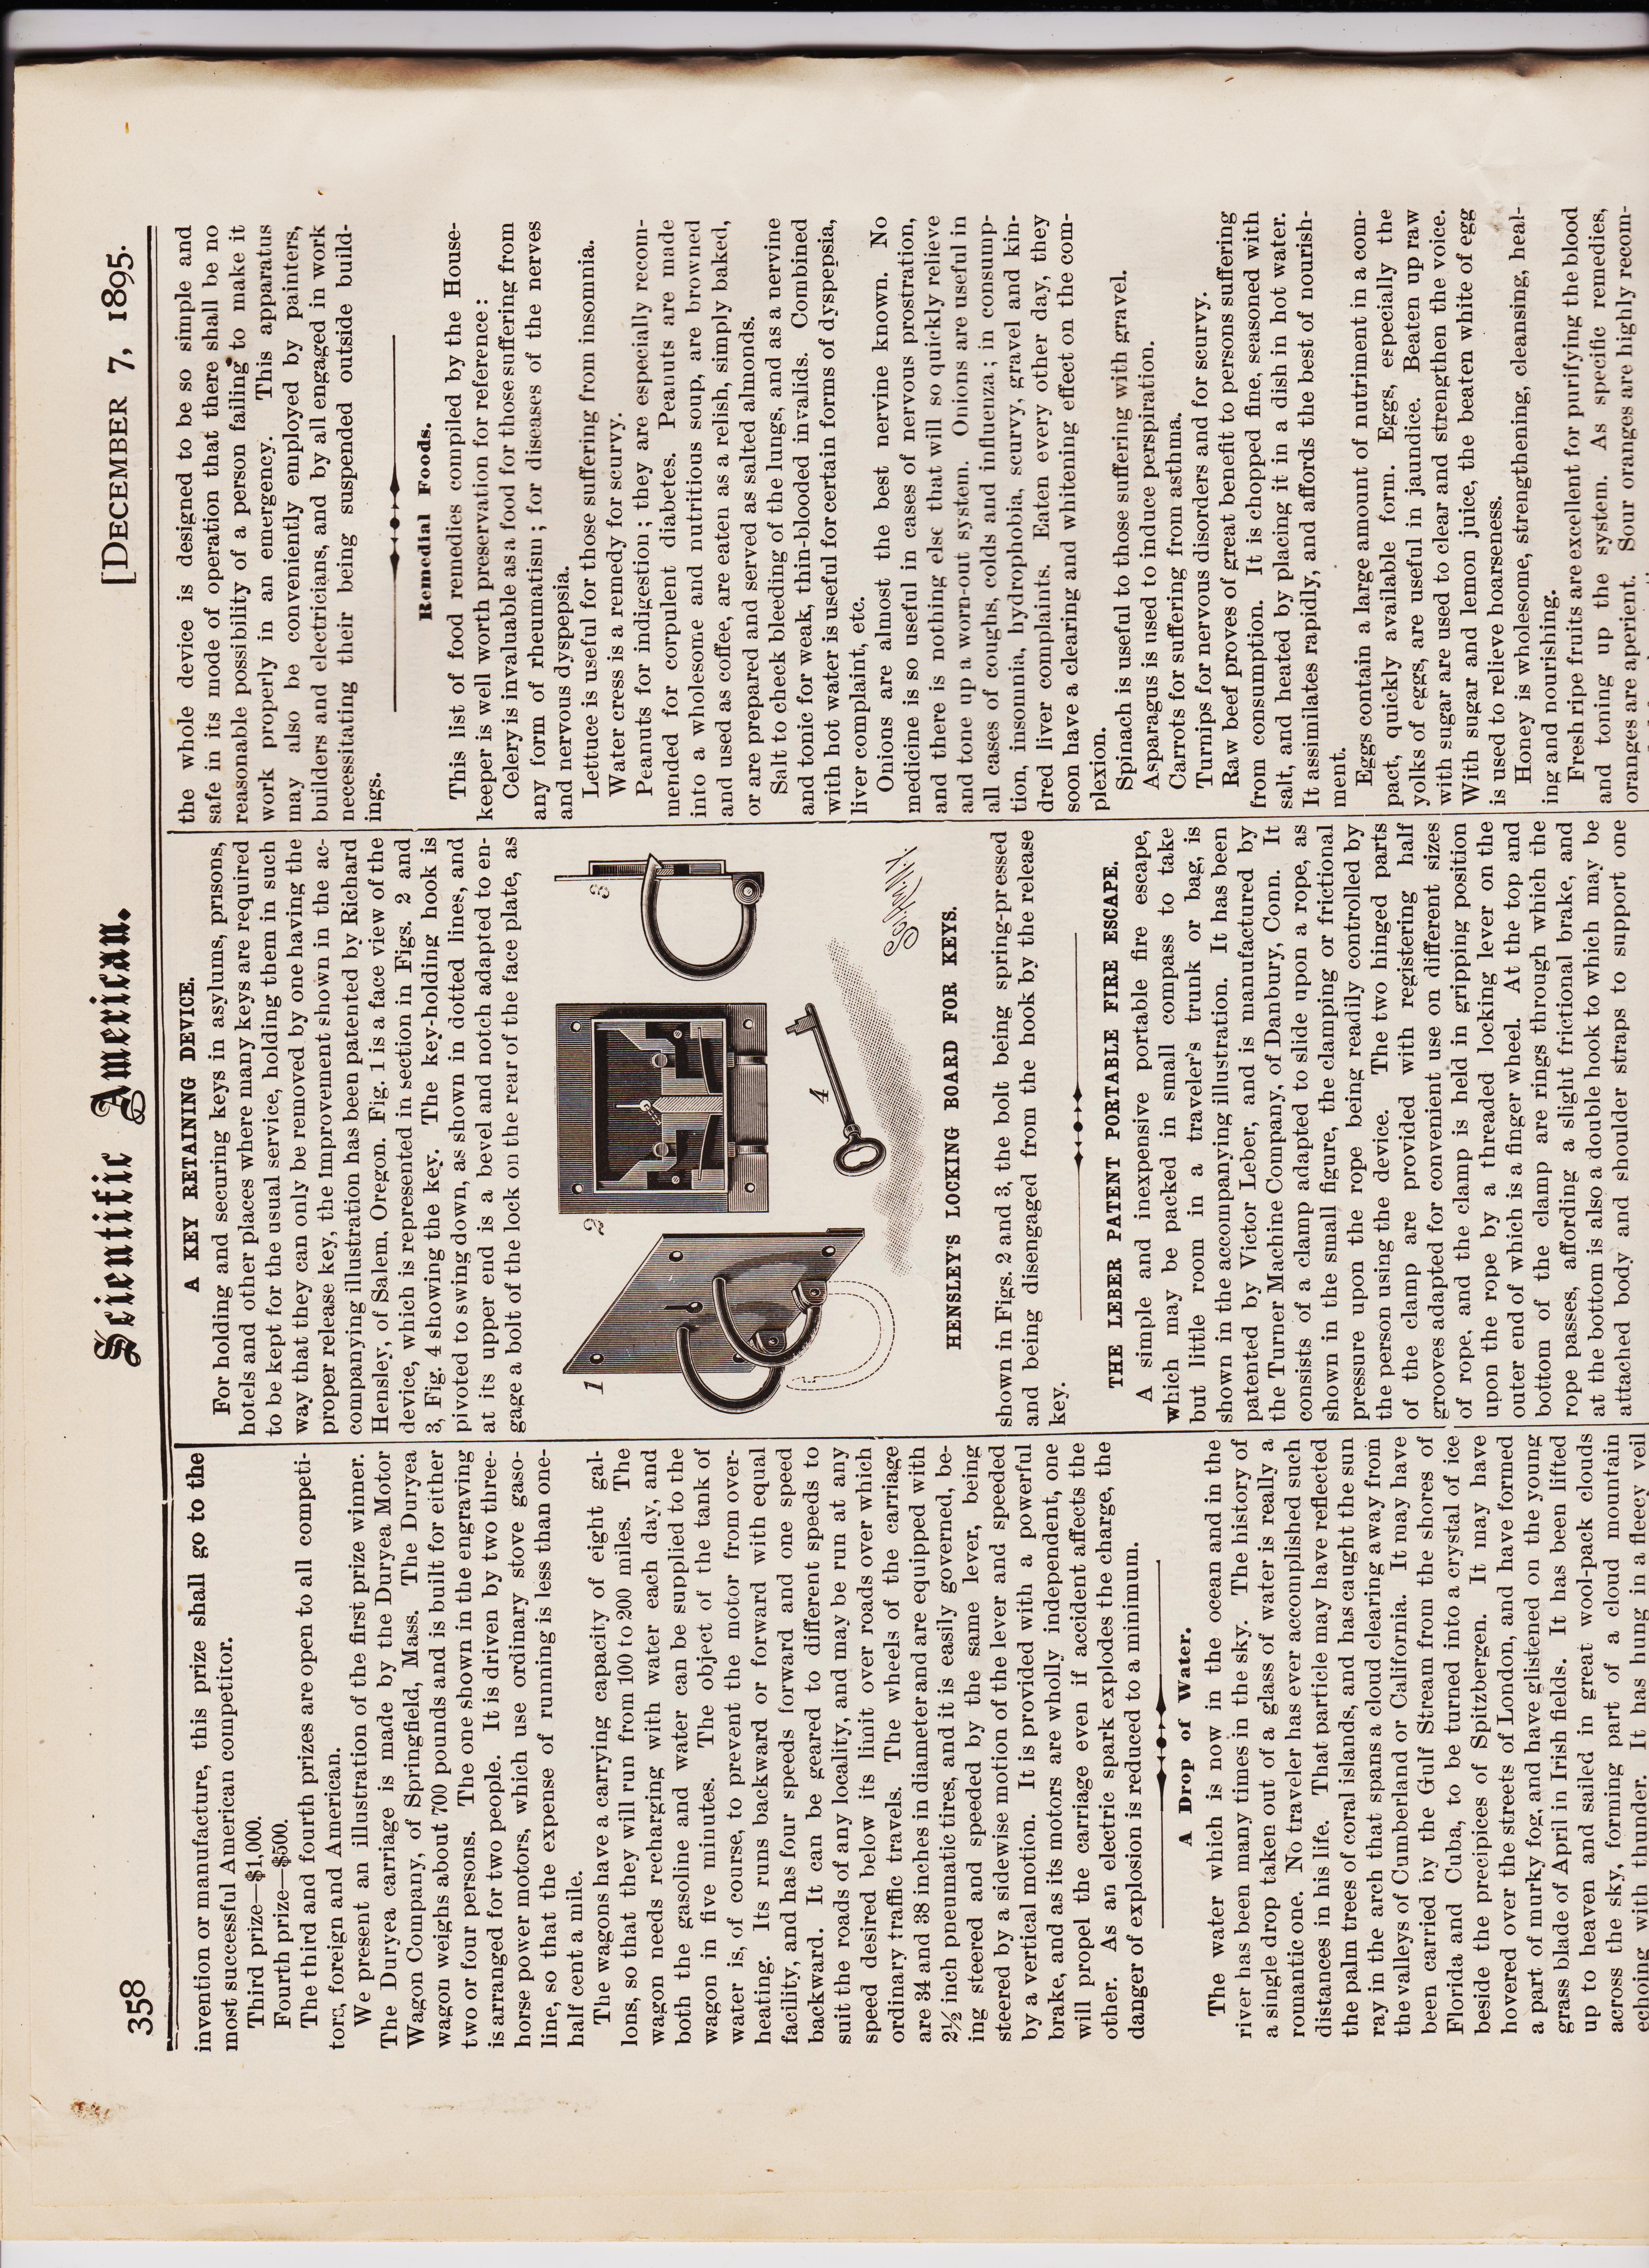 https://antiquemachinery.com/images-scientific-american/Scientific-American-1895-Dec-7-1895-pg-358-top-Duryer-Automobile-Wins-1895-Alumina-from-Clay-Calcium-Carbide-Potassiumorthodinitrocroesolate.jpeg